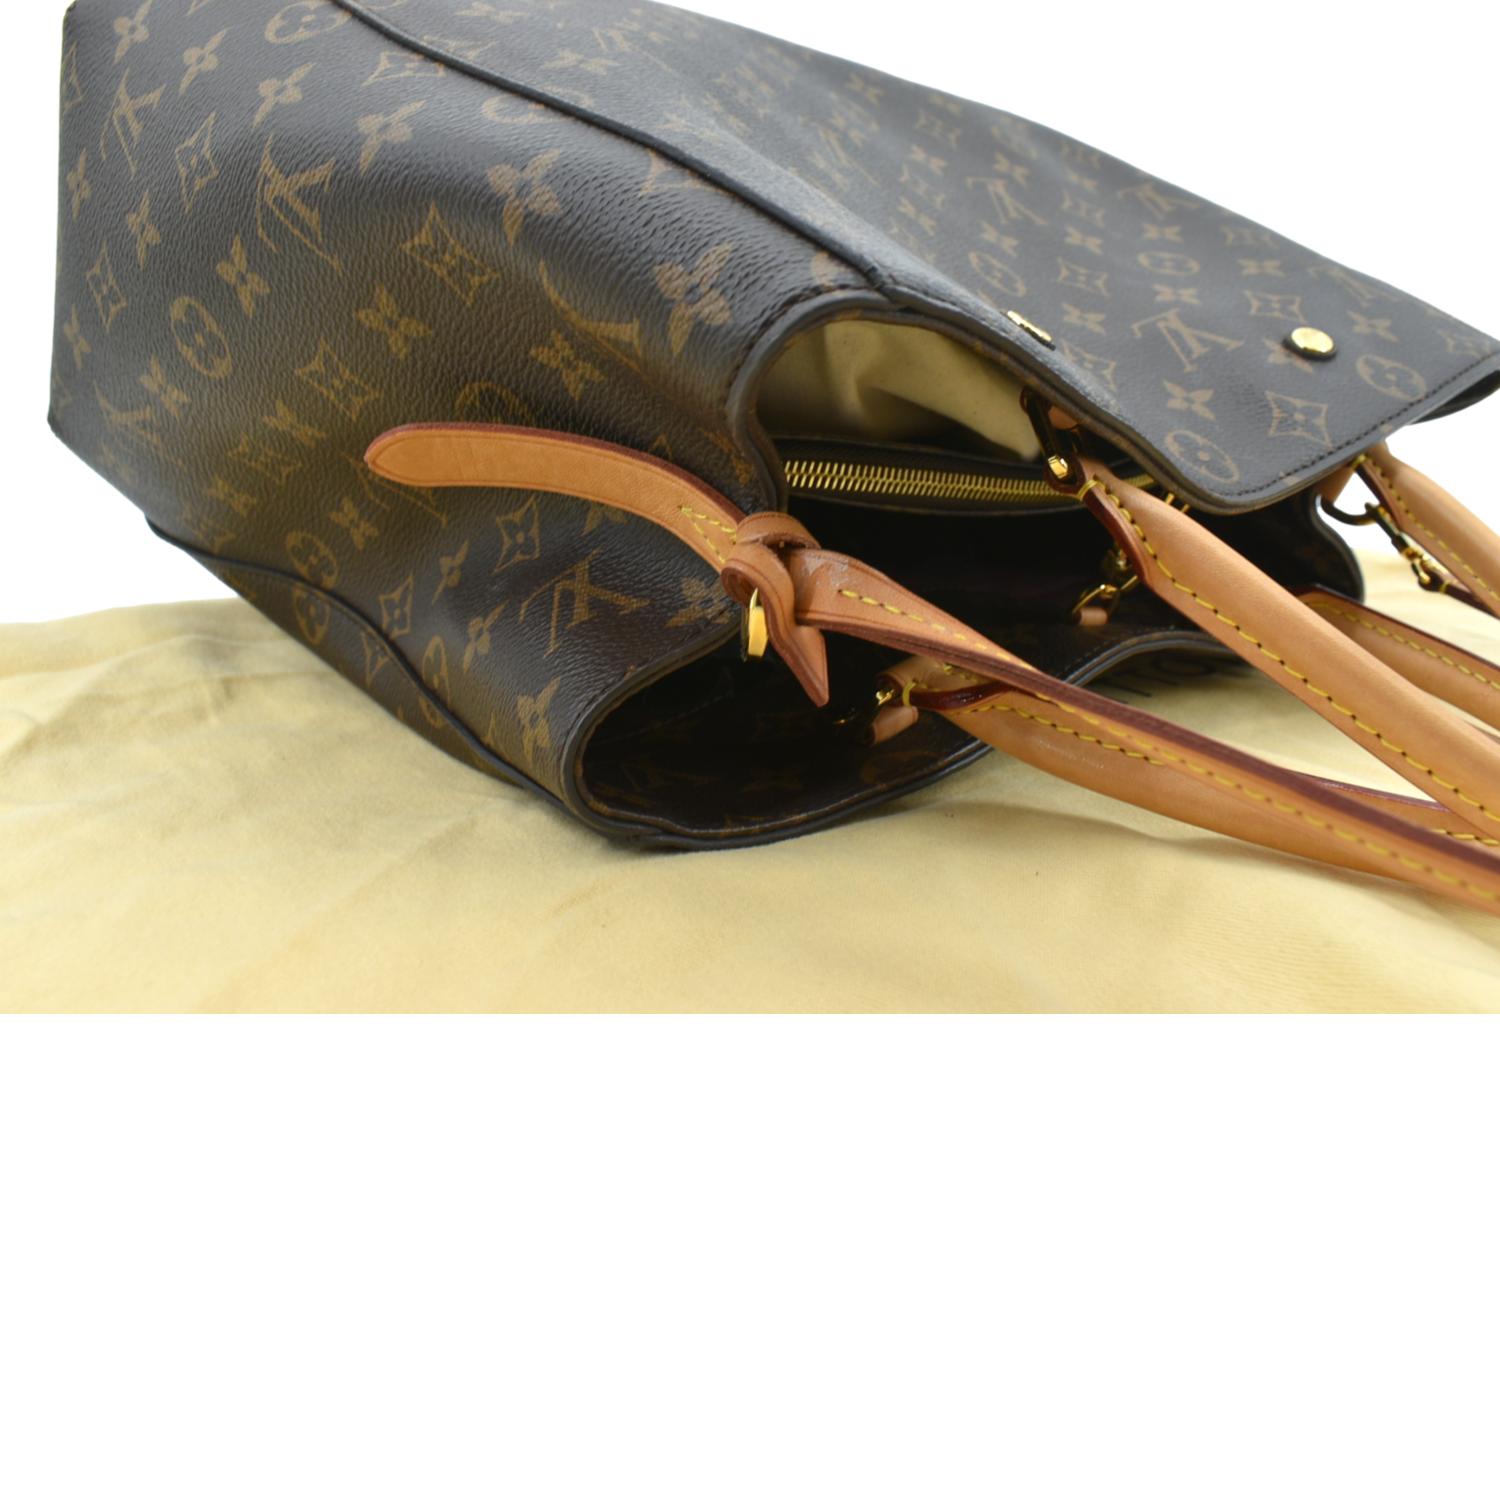 Louis Vuitton (LV) Montaigne Navy Blue Bag (Original), Luxury